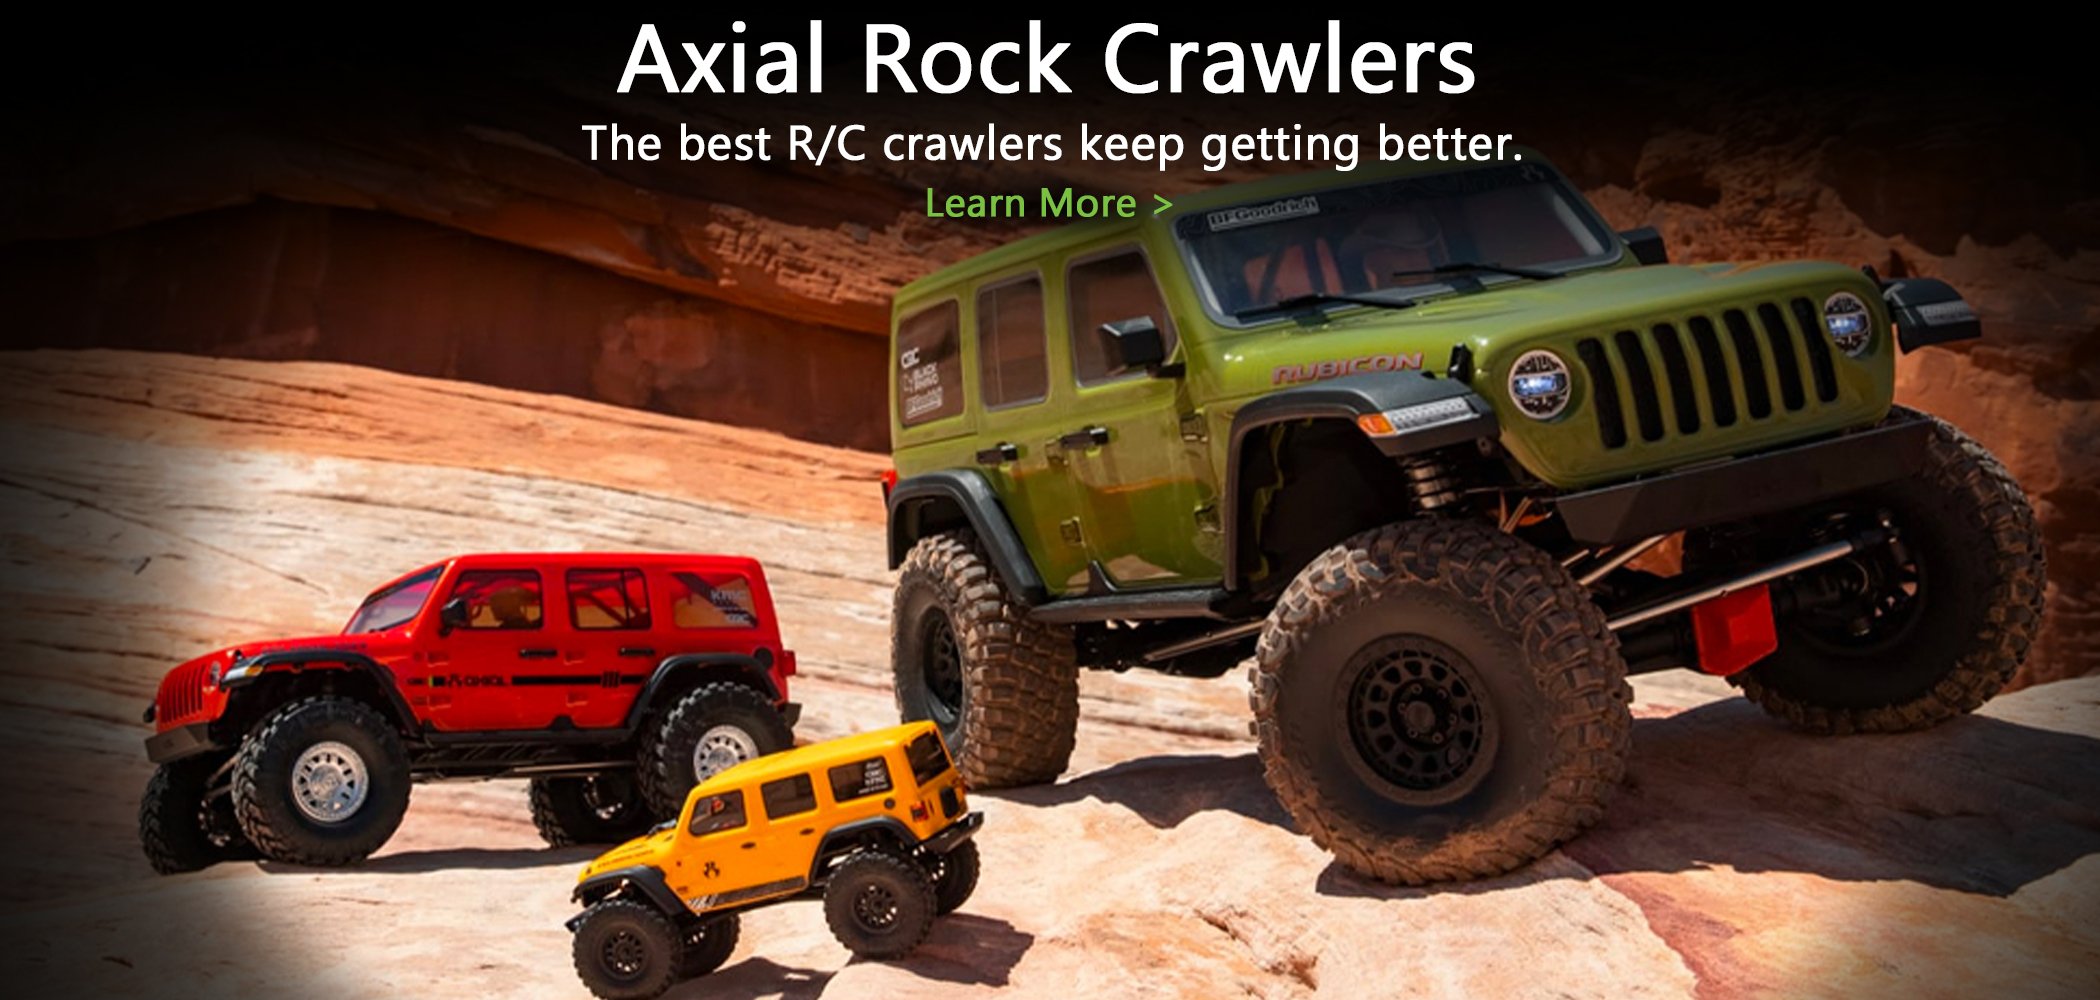 Axial Rock Crawlers